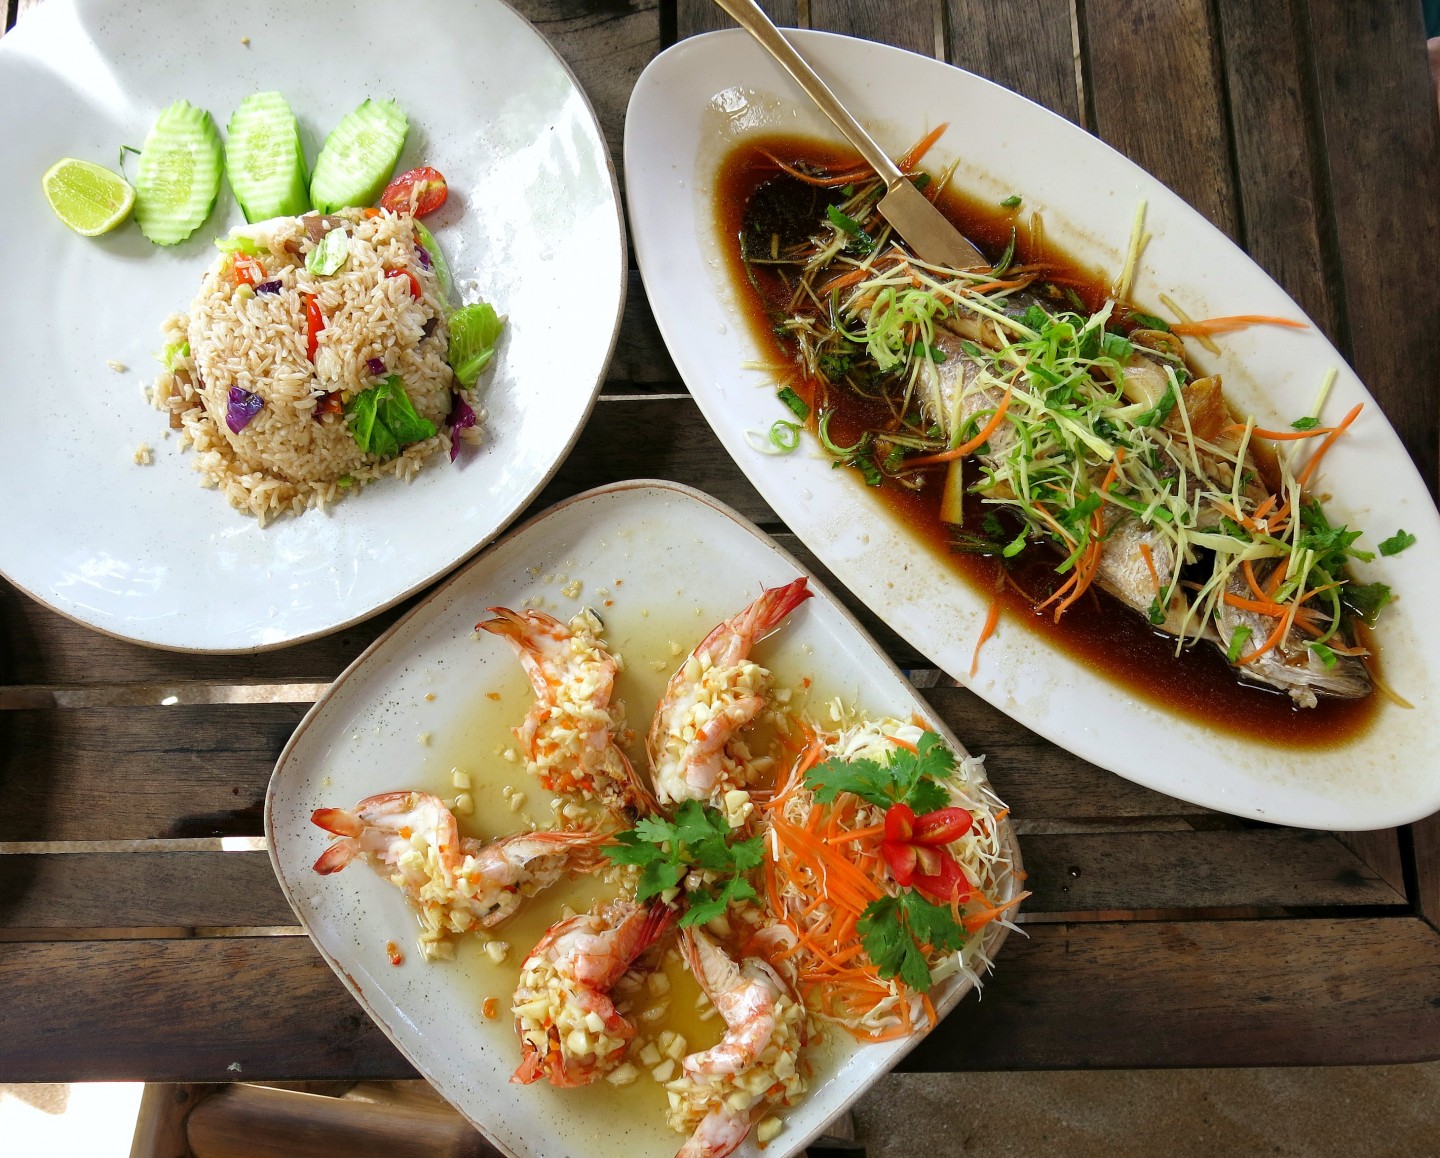 We loved the fresh fish at Same Same But Different restaurant on Koh Lanta.